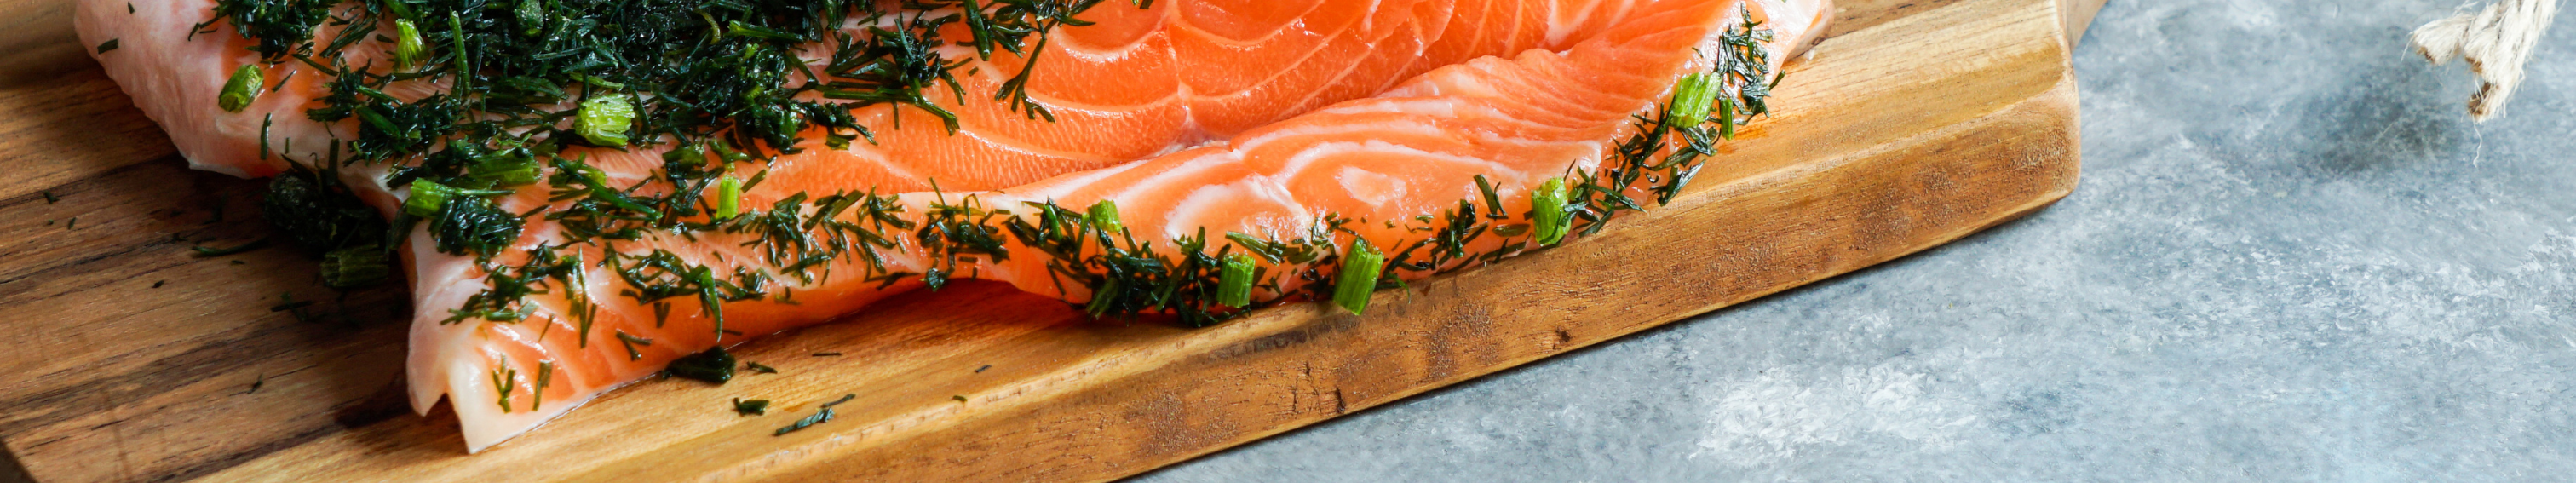 Salmon gravlax recipe for easter